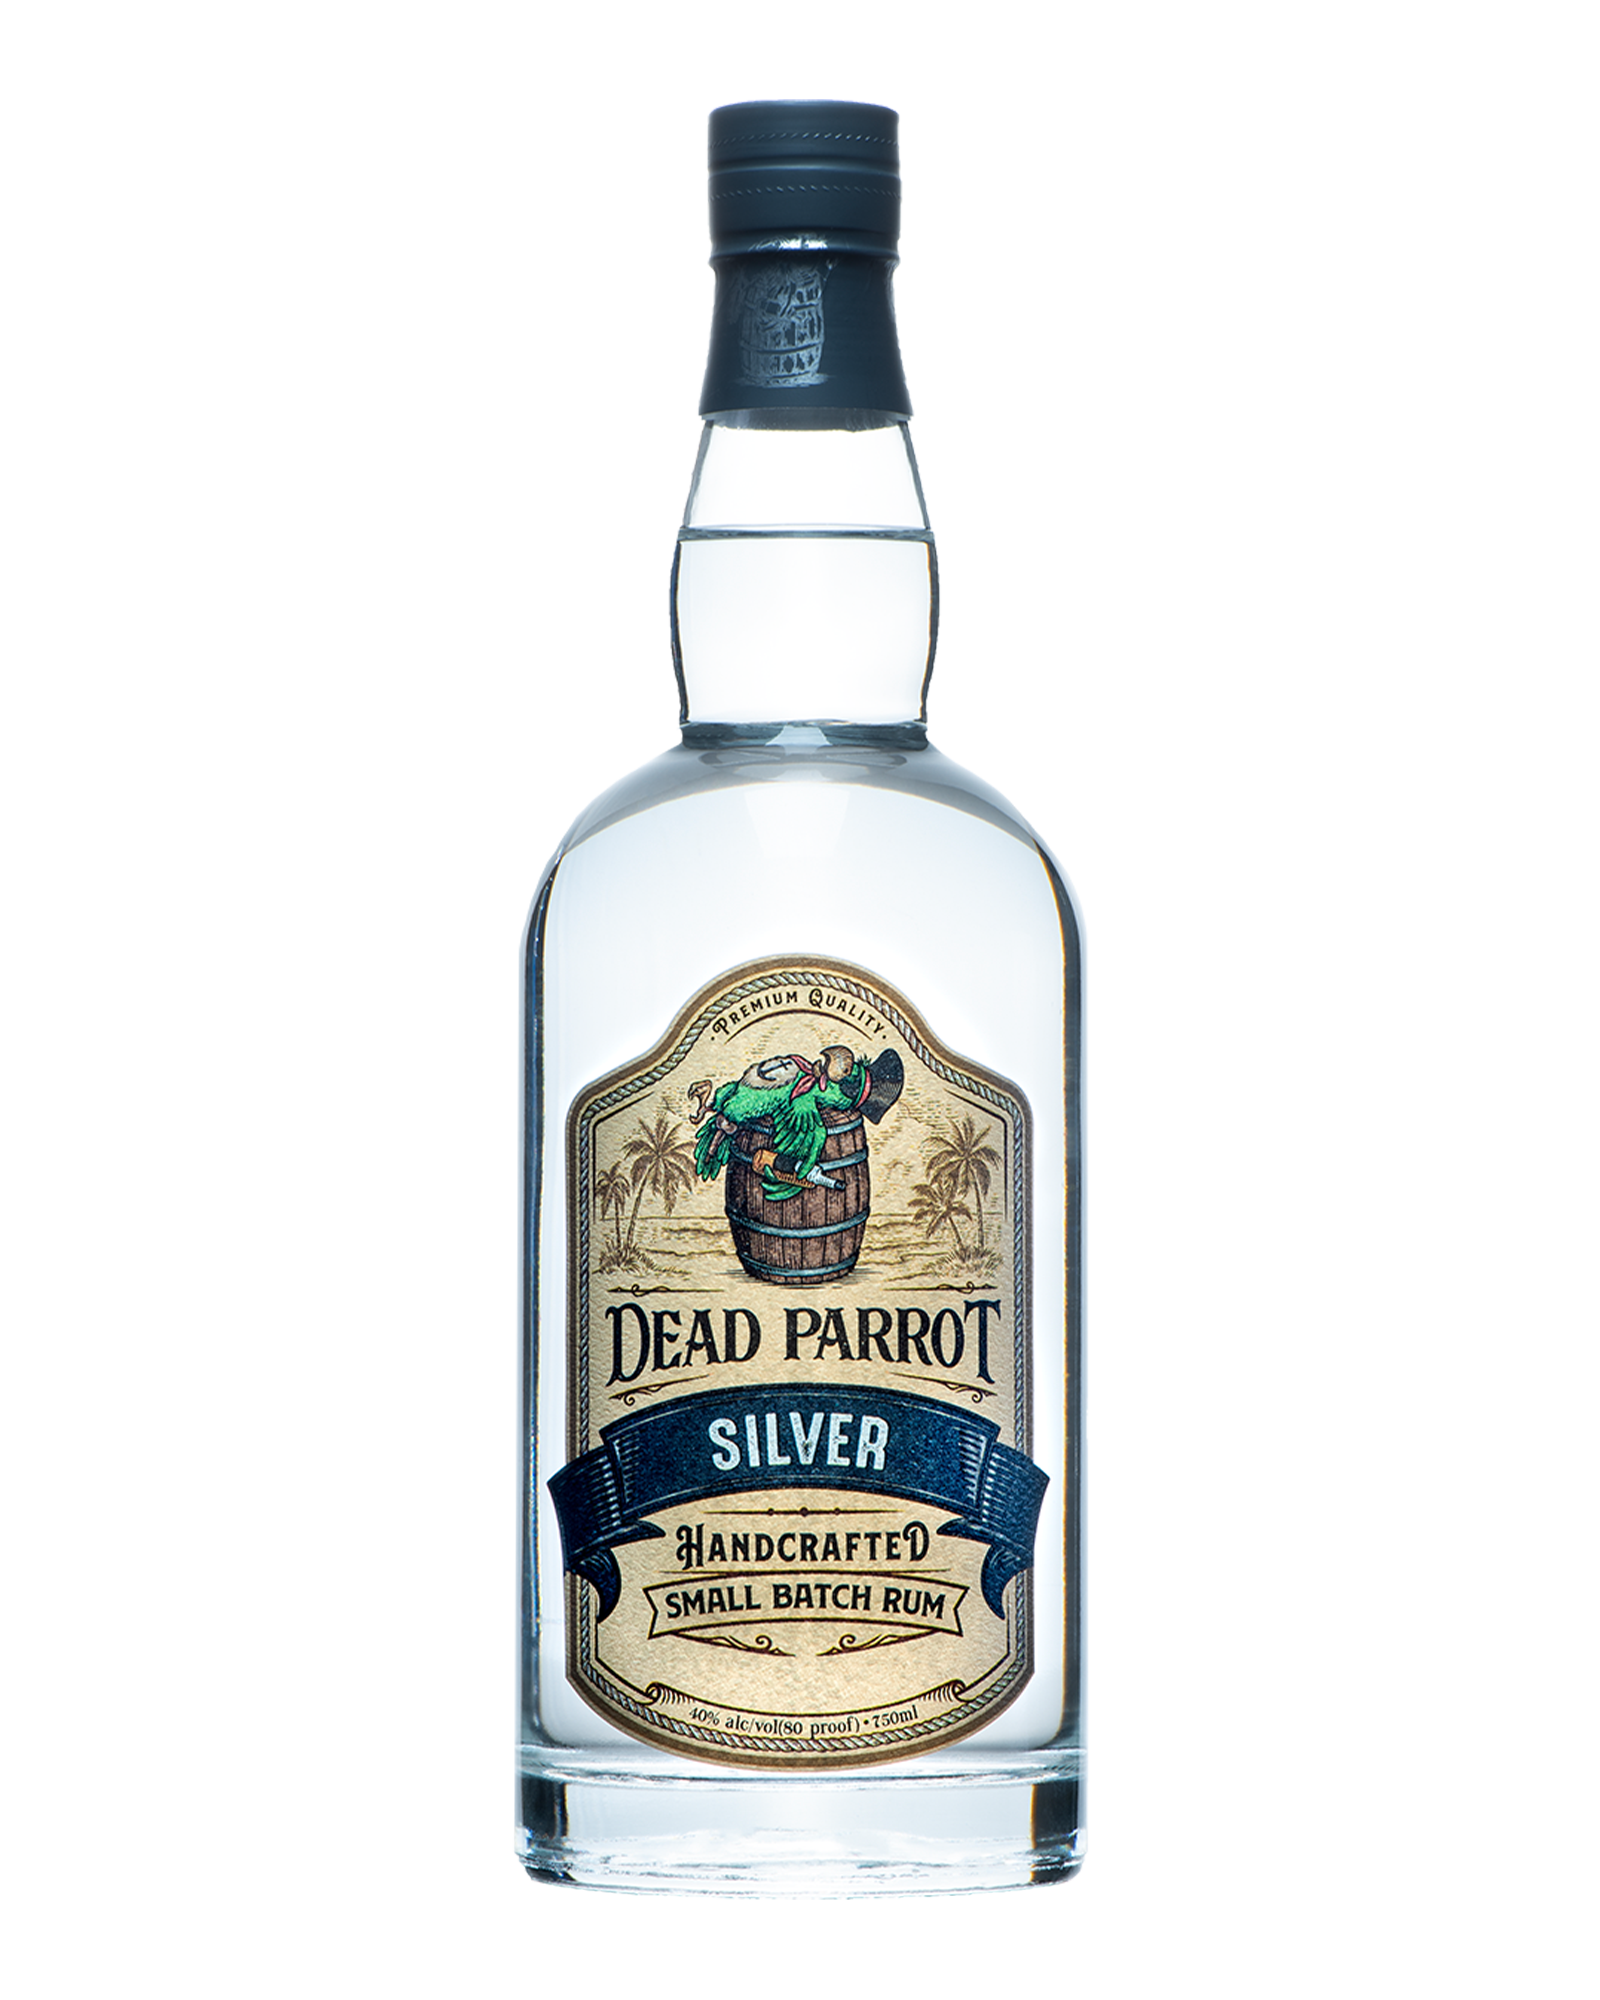 Dead Parrot Silver Rum bottle